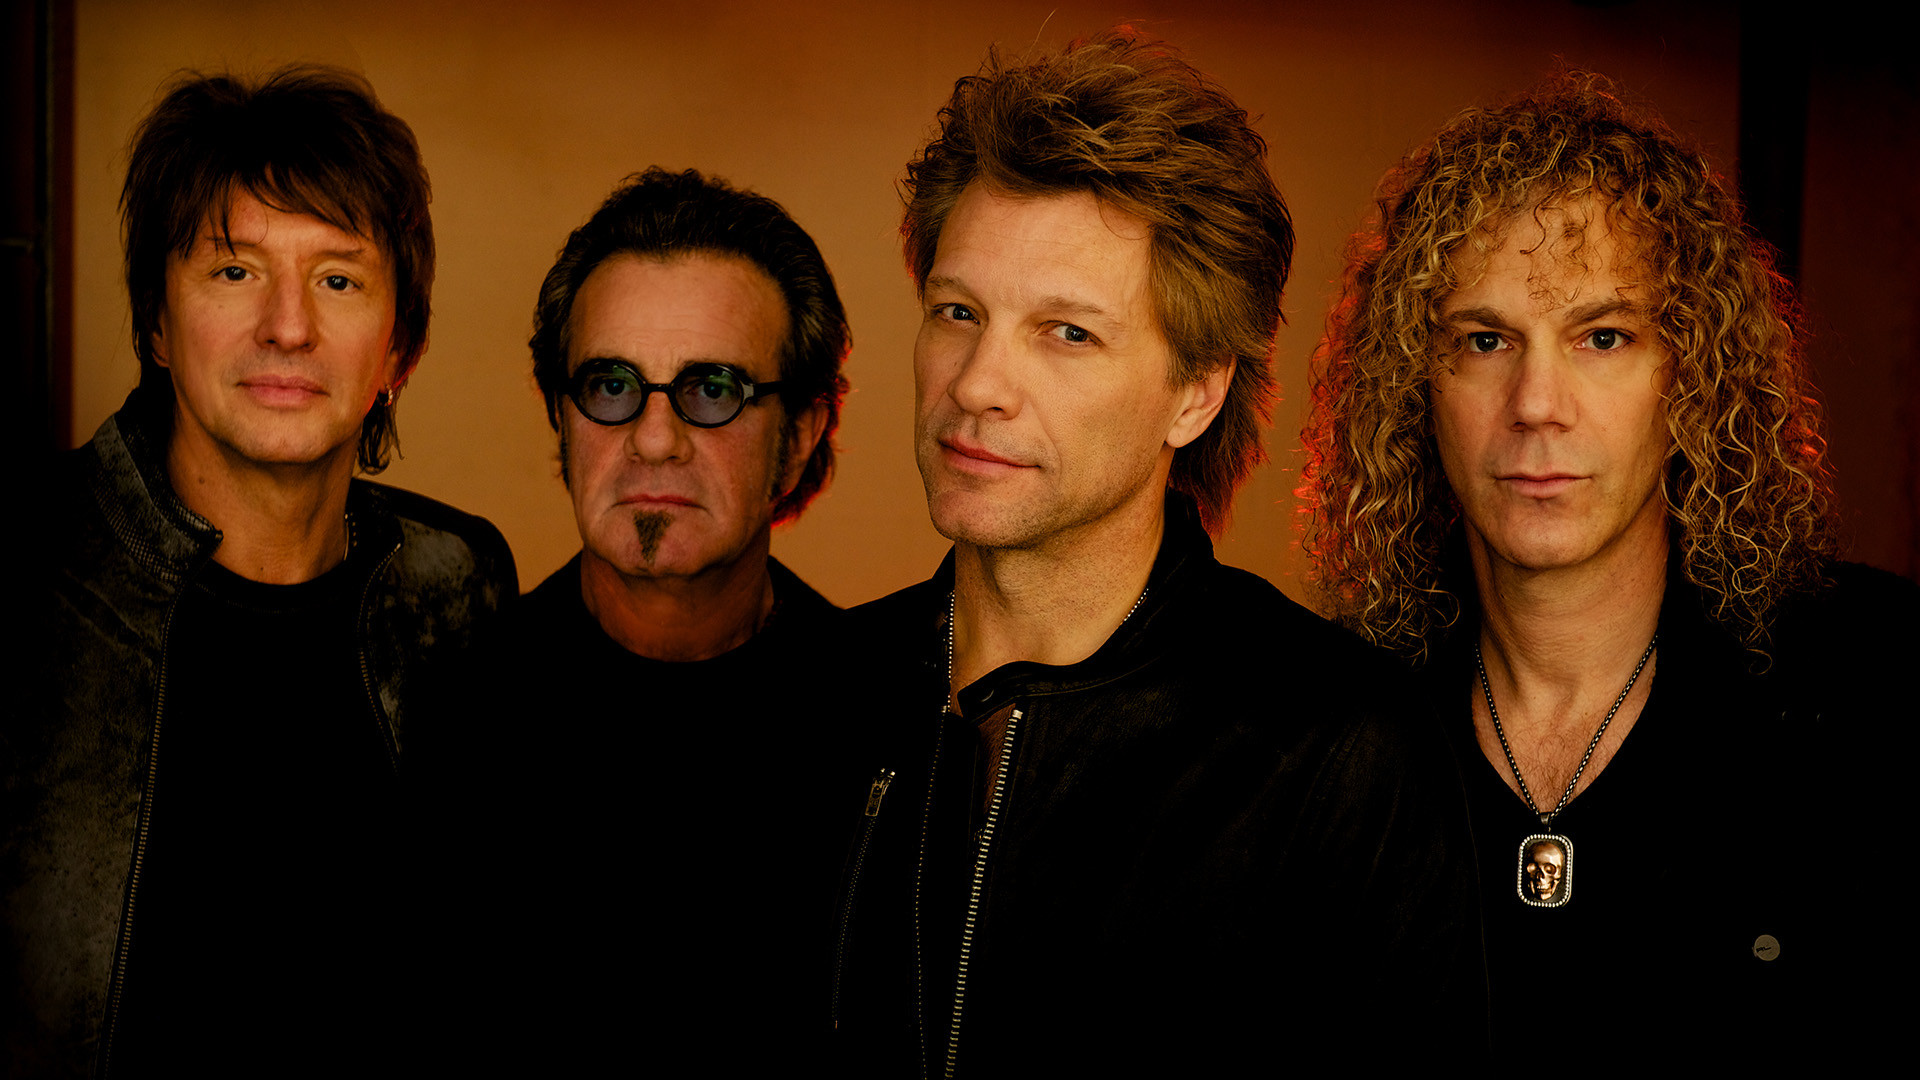 1920x1080 Bon Jovi. Wallpaper: Bon Jovi